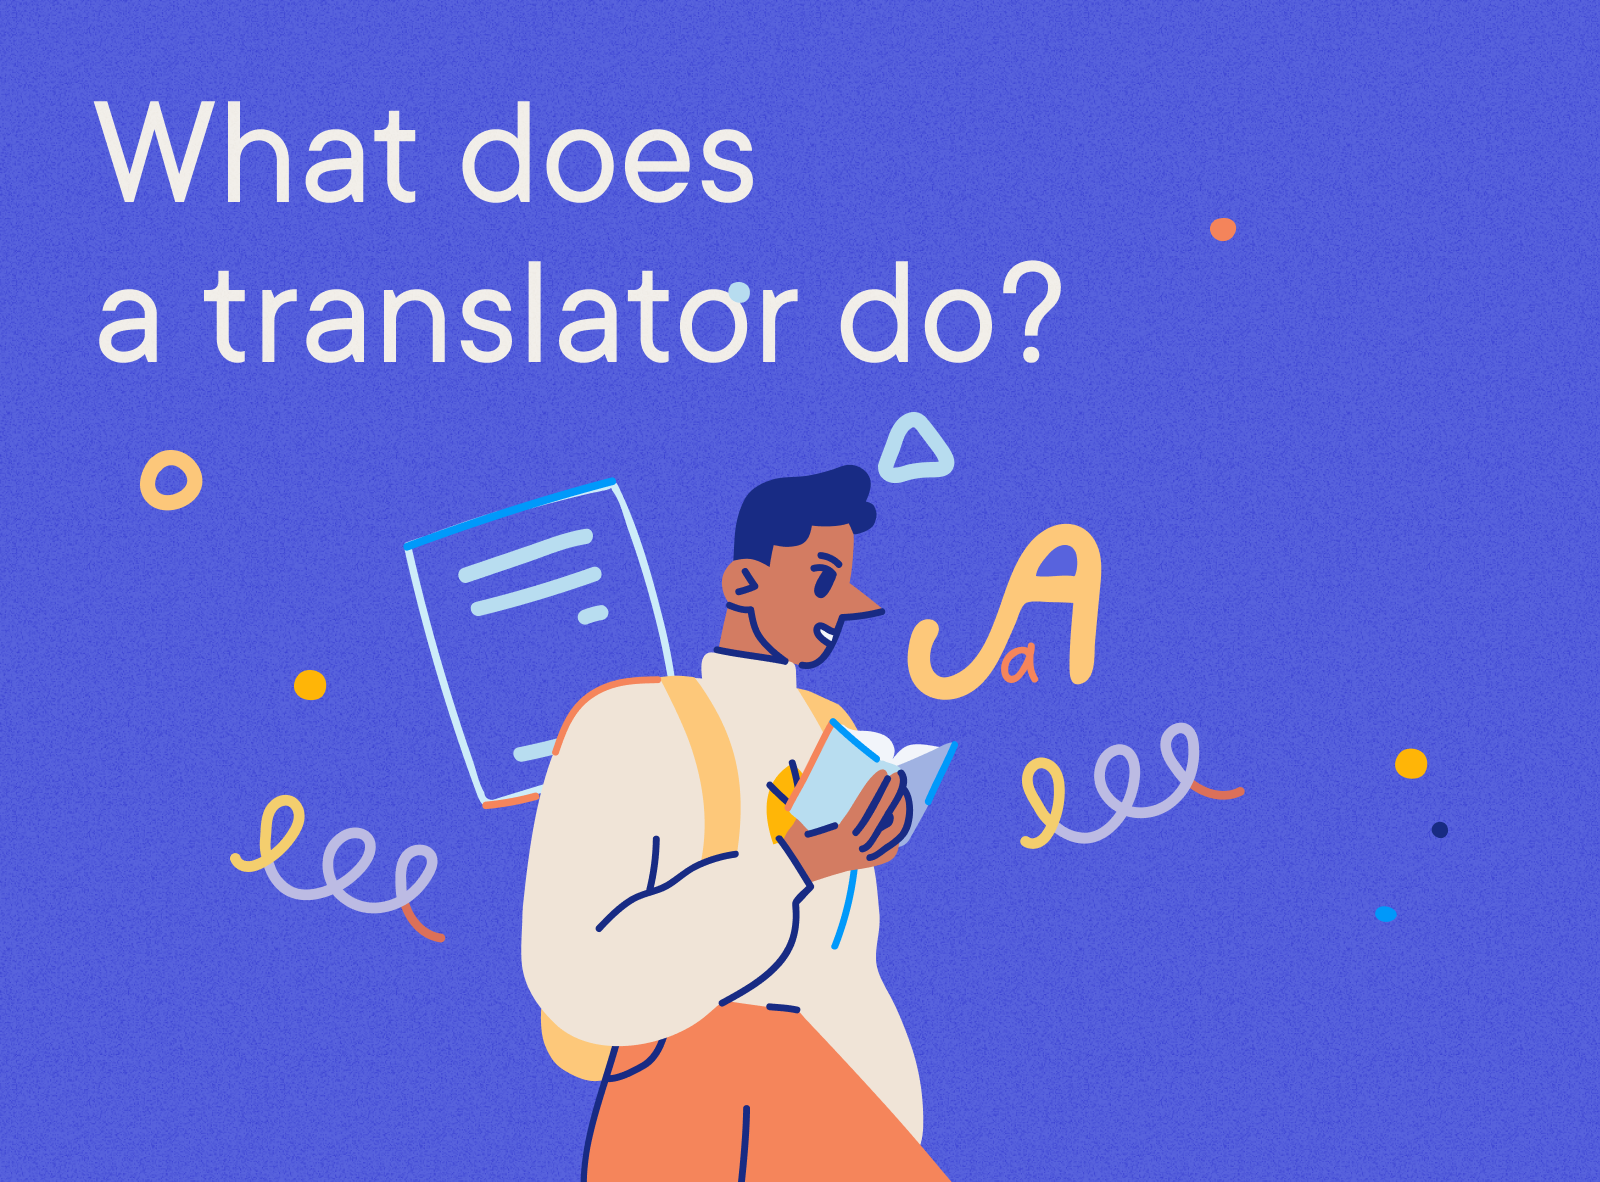 Translator - What does a translator do?